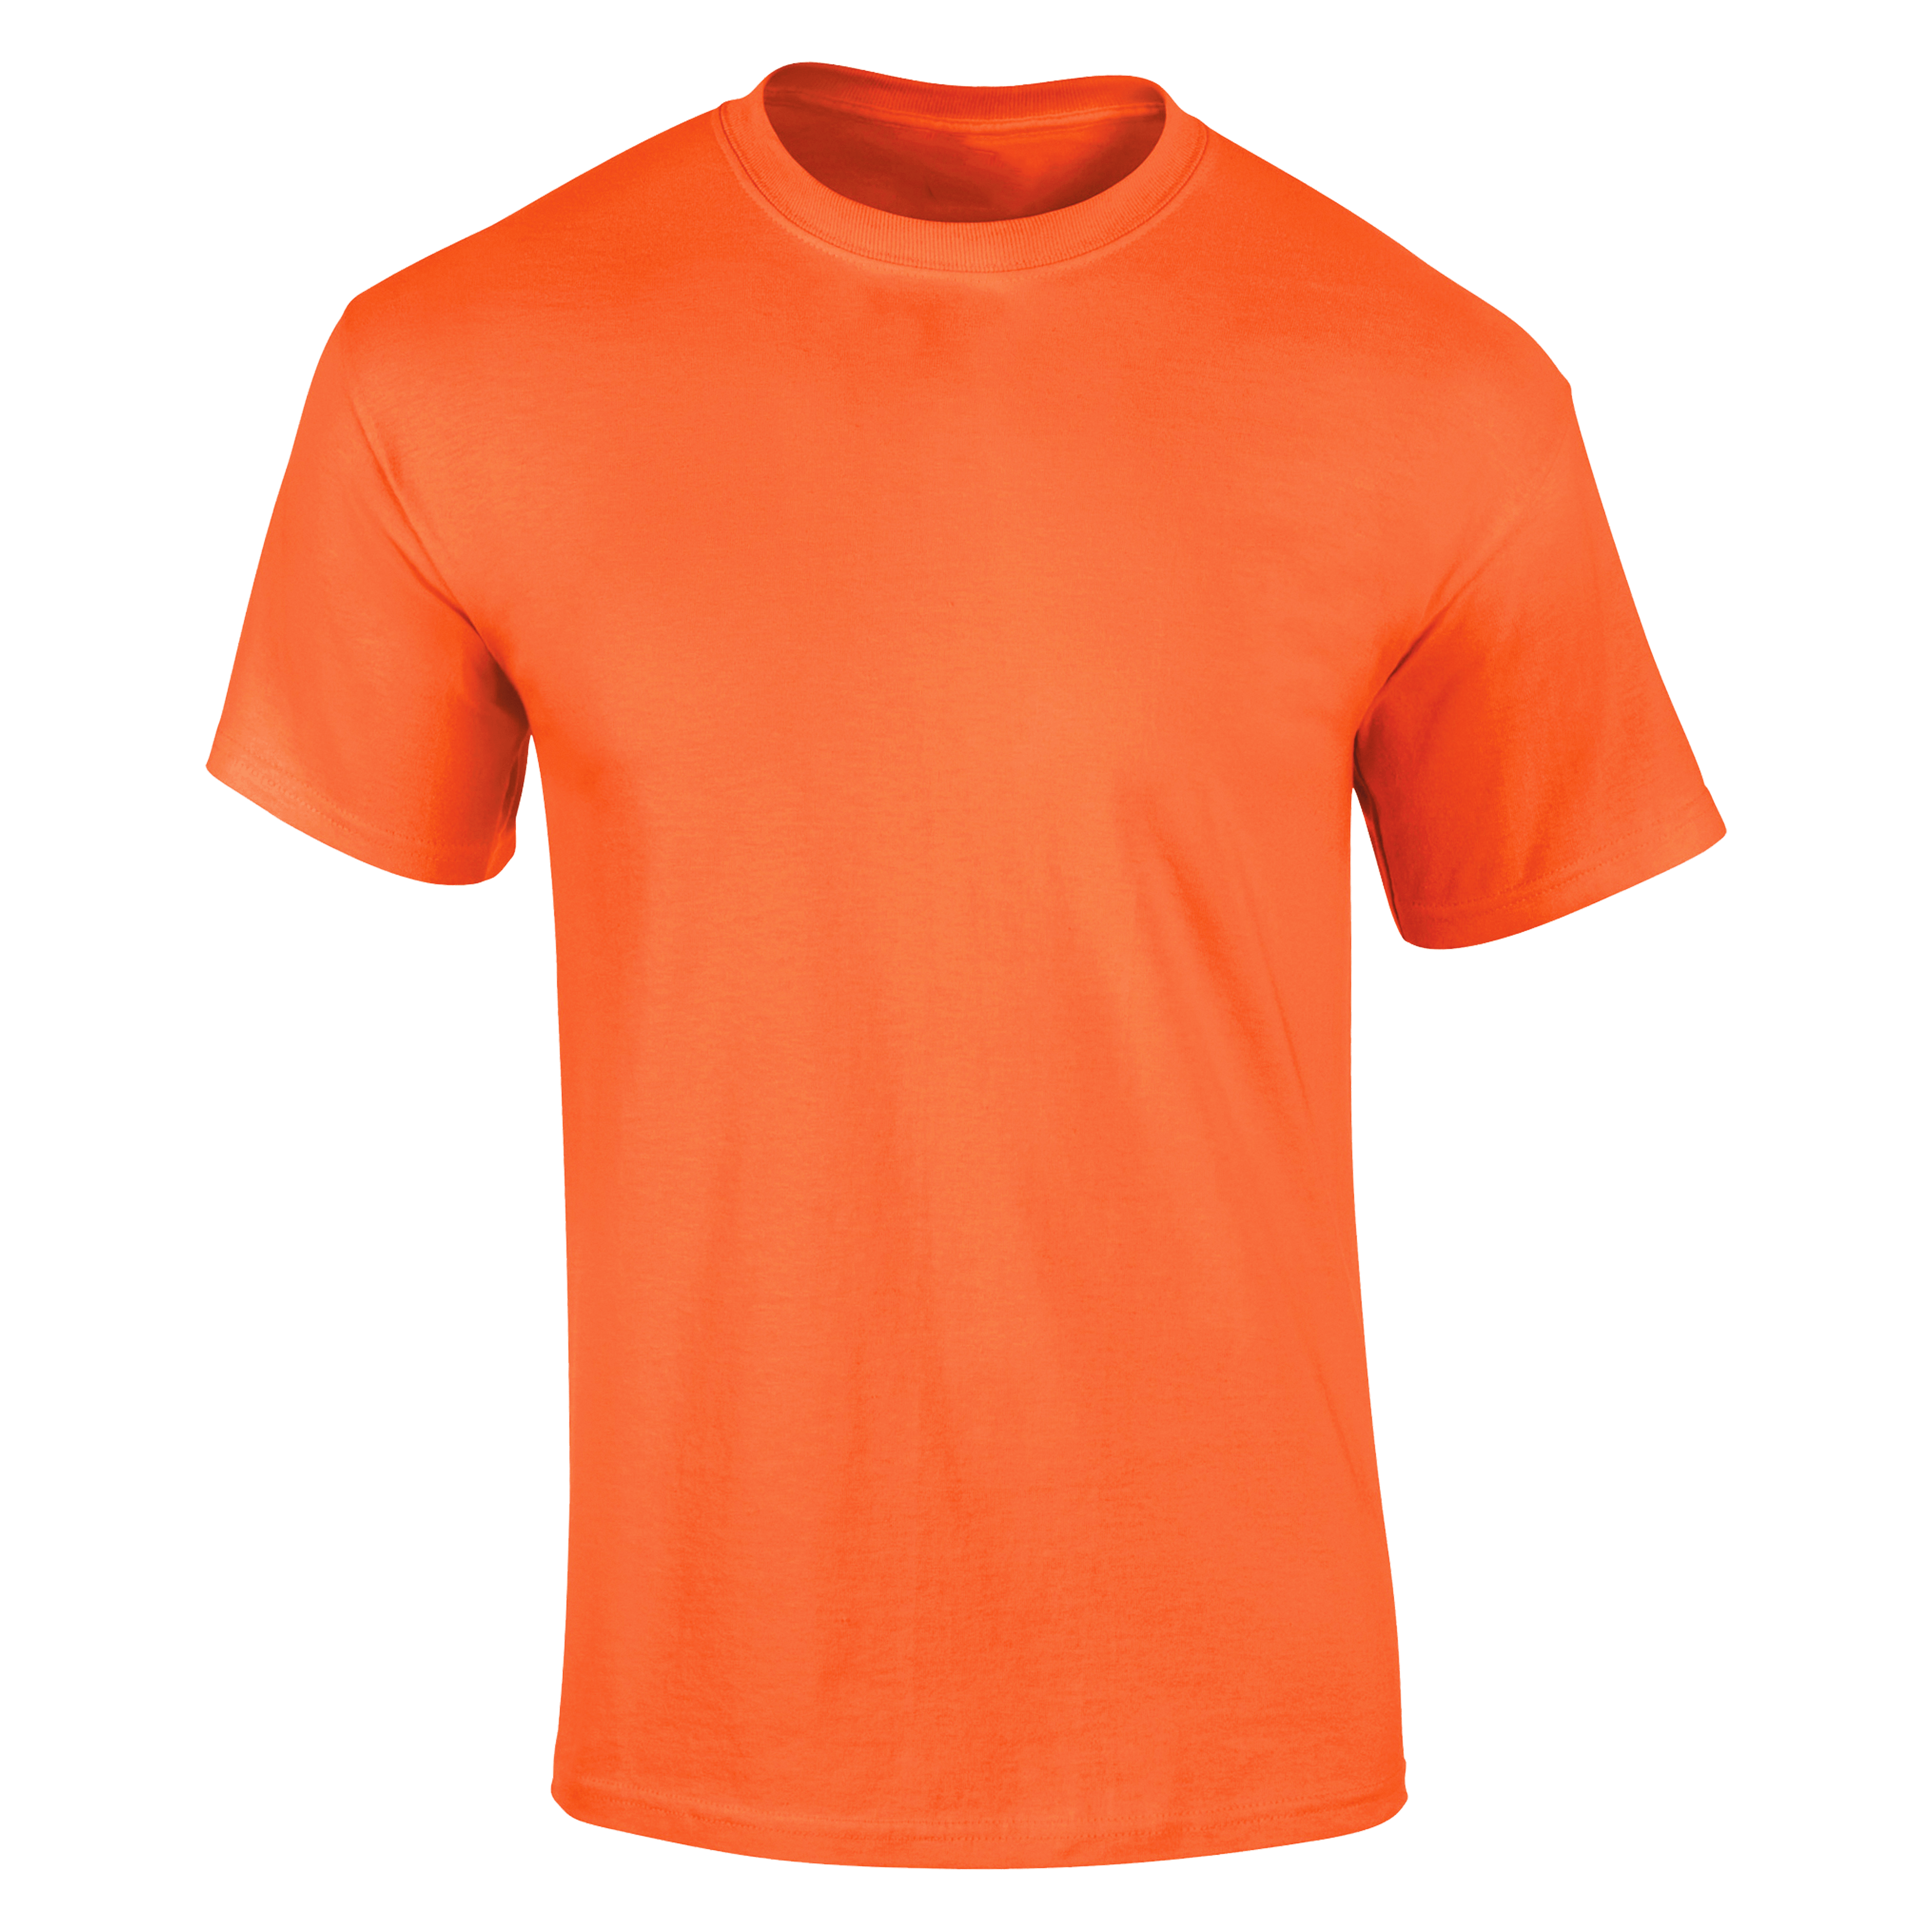 Short sleeve t shirt for men orange front